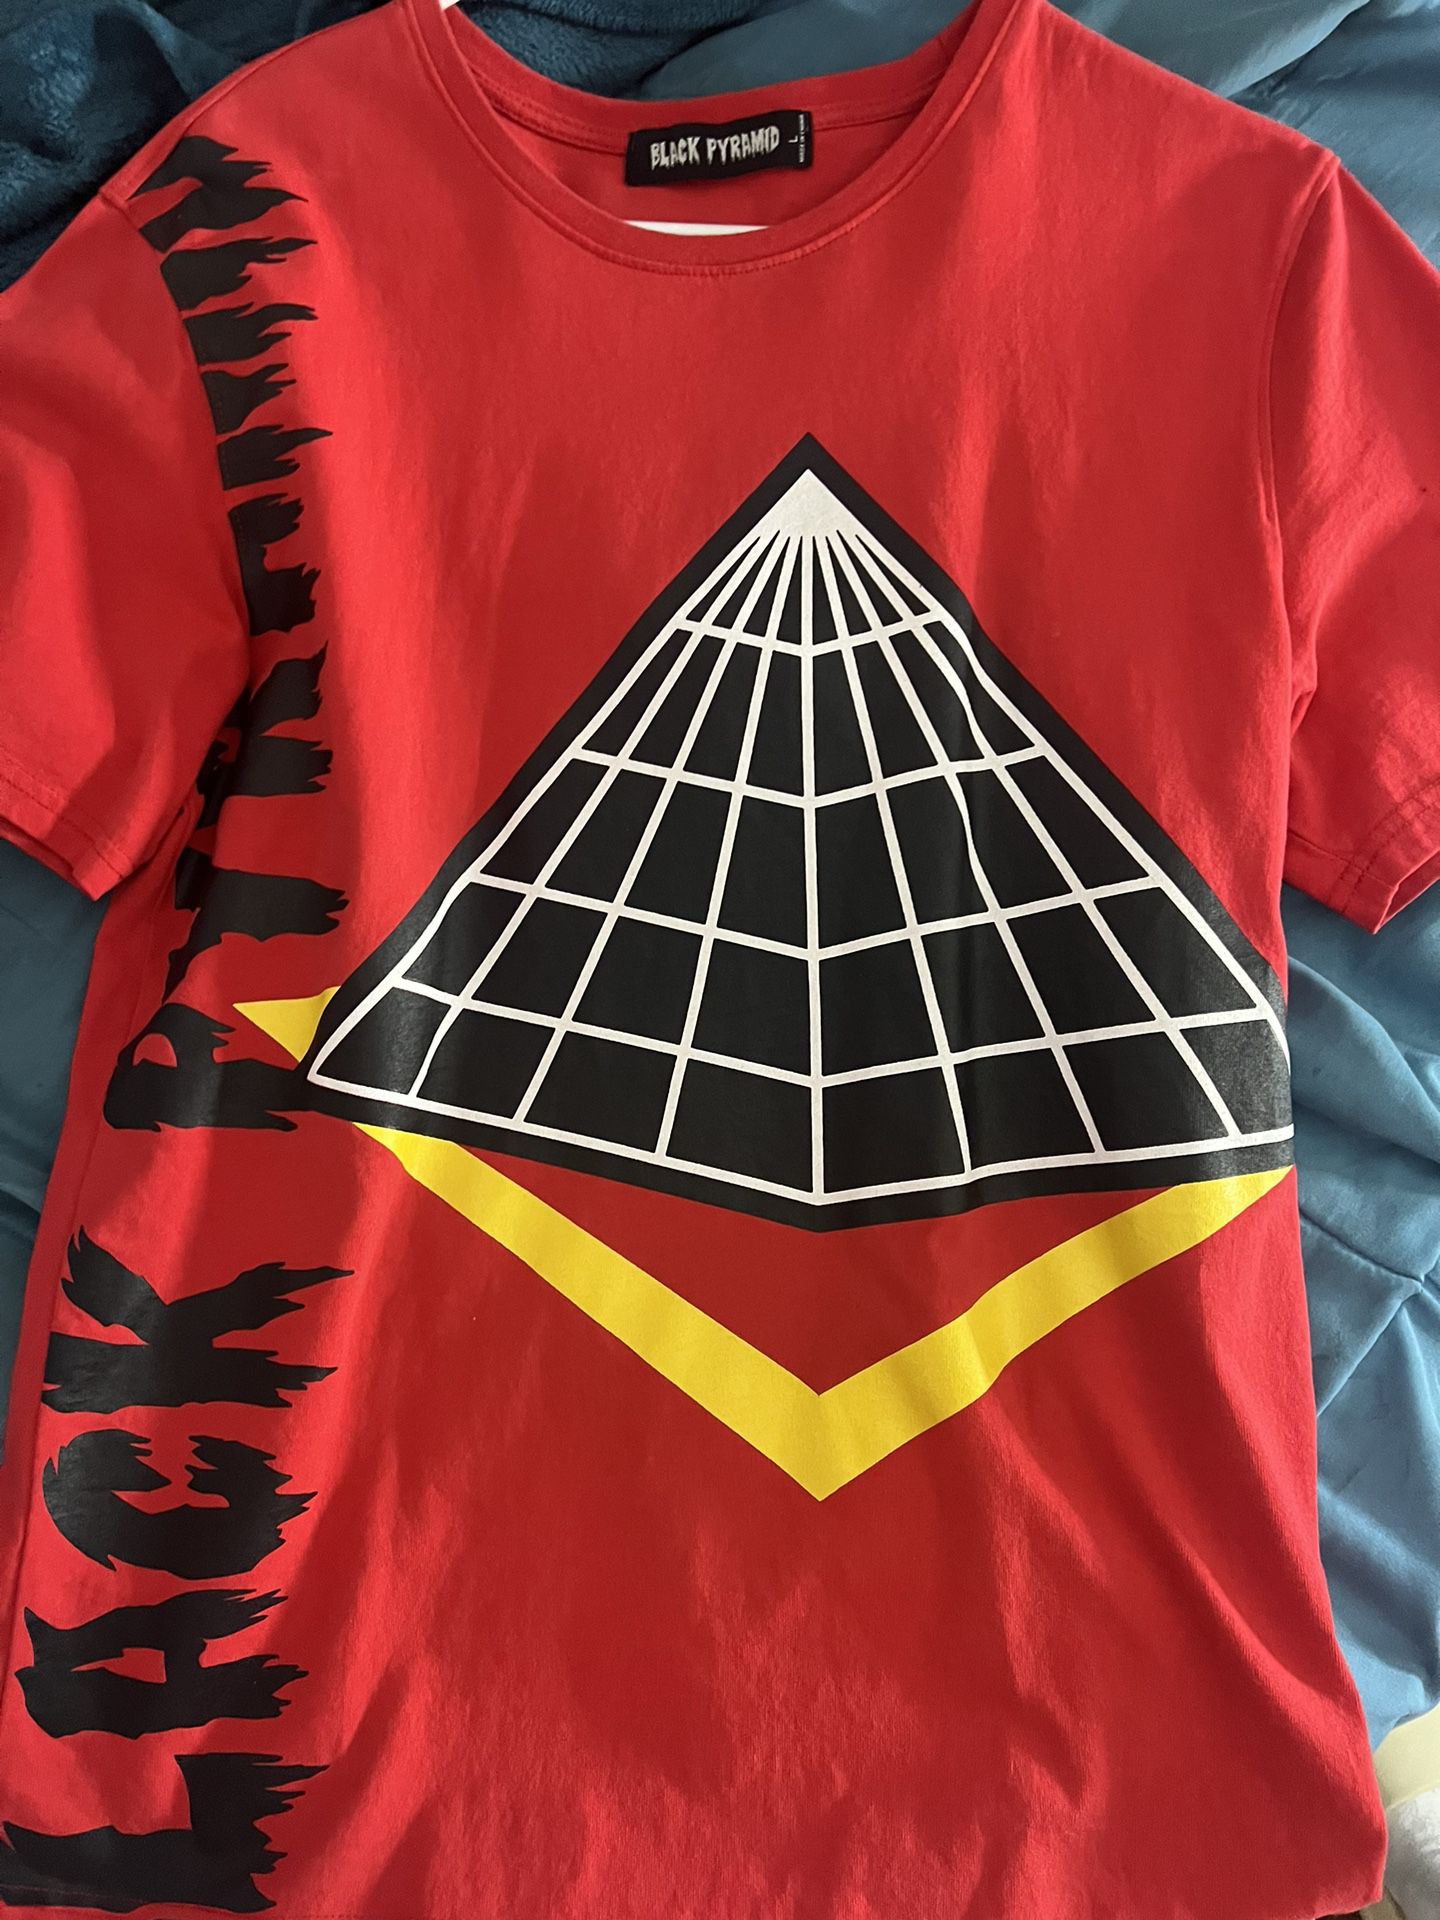 Black Pyramid Shirt Size L